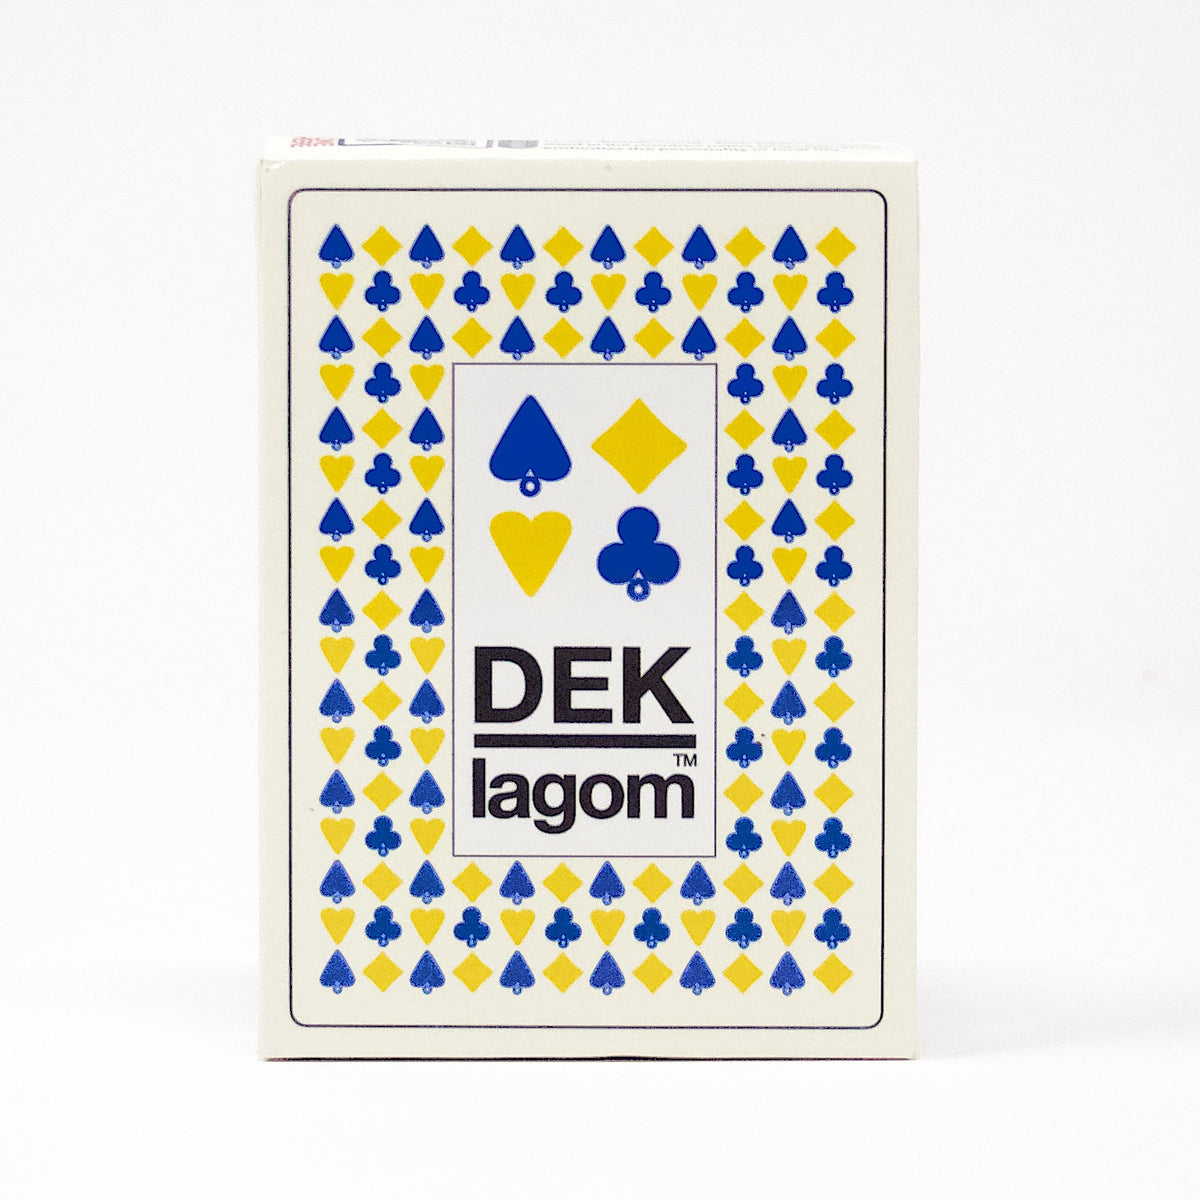 29420 | DEK of Cards: lagom DEK–Scandinavian Design Playing Cards